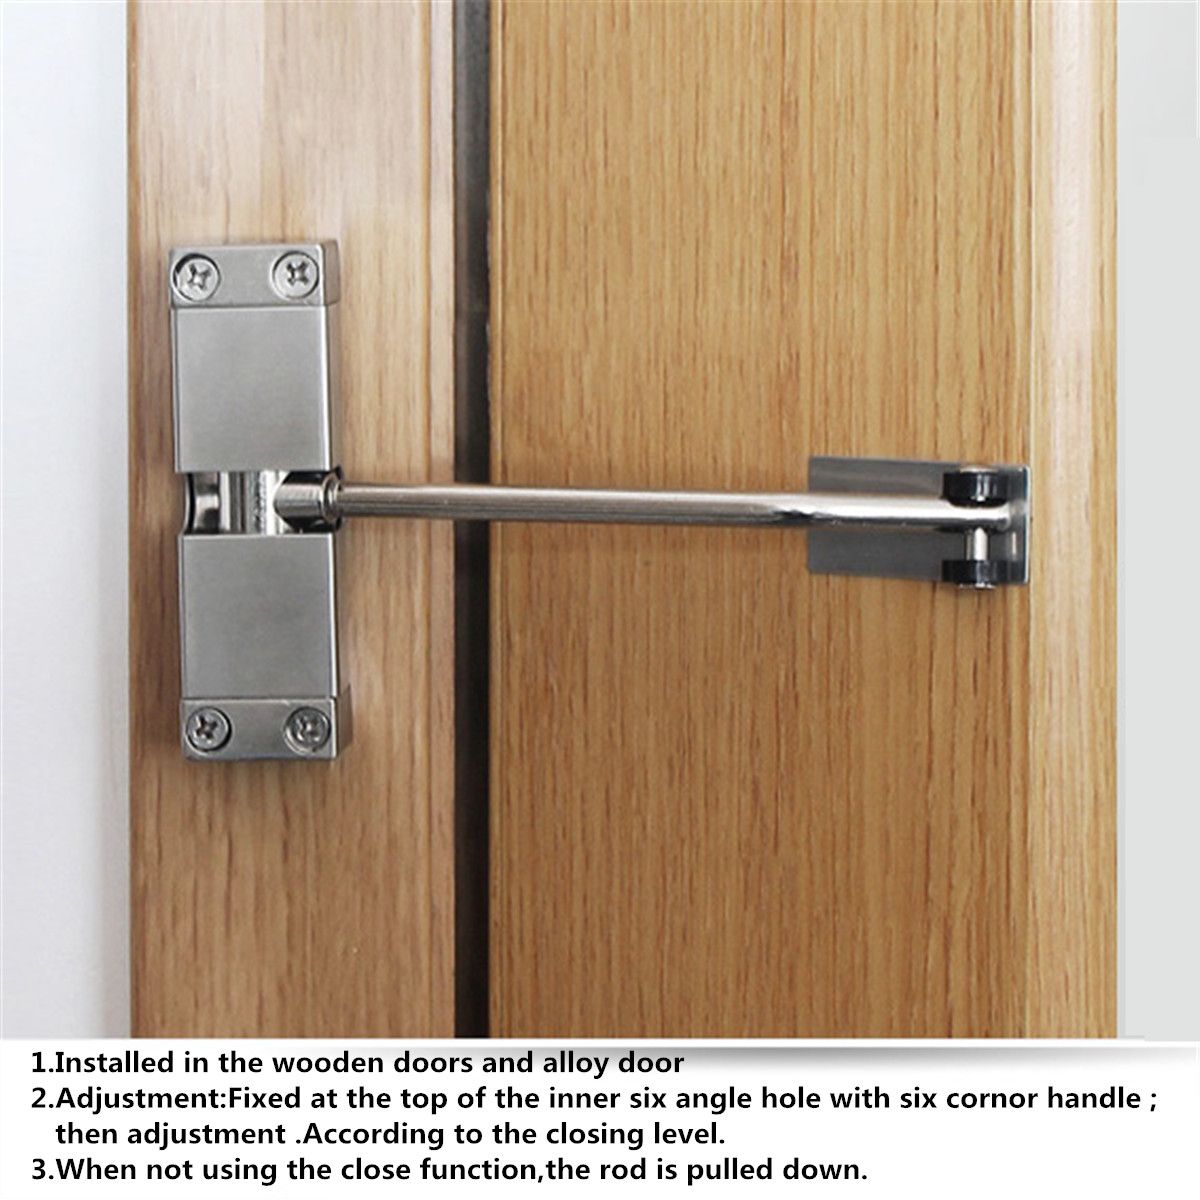 Adjustable-Spring-Door-Closer-Automatic-Strength-Hinge-for-Fire-Rated-Door-Channel-1218443